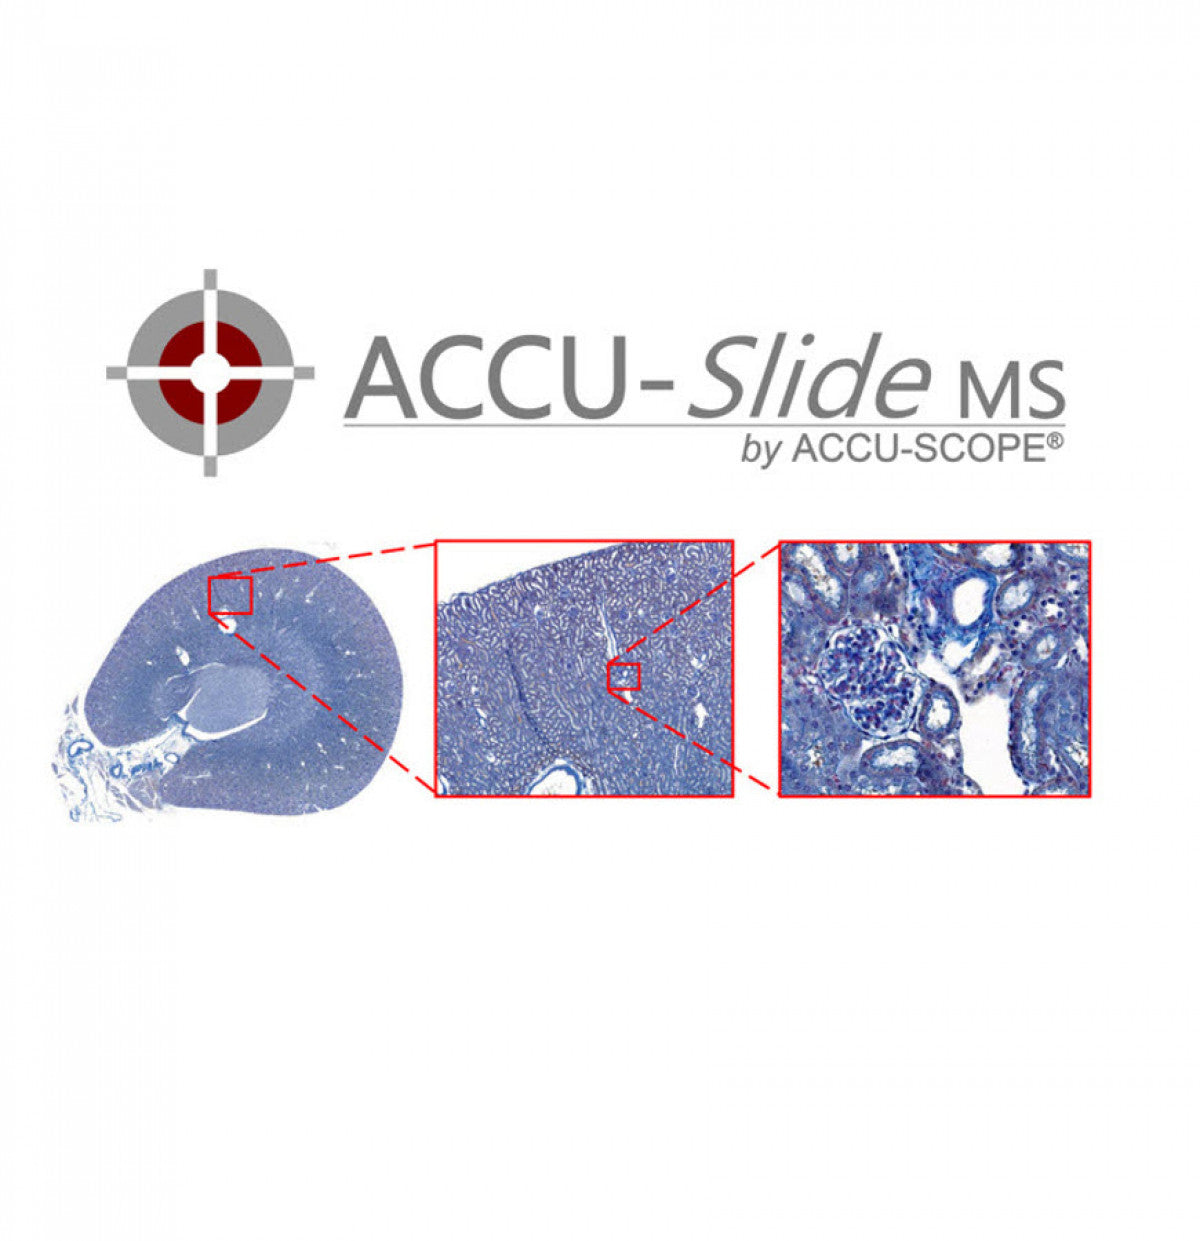 Accu-Scope ACCU-SlideMS Manual Slide Scanning System - microscopemarketplace